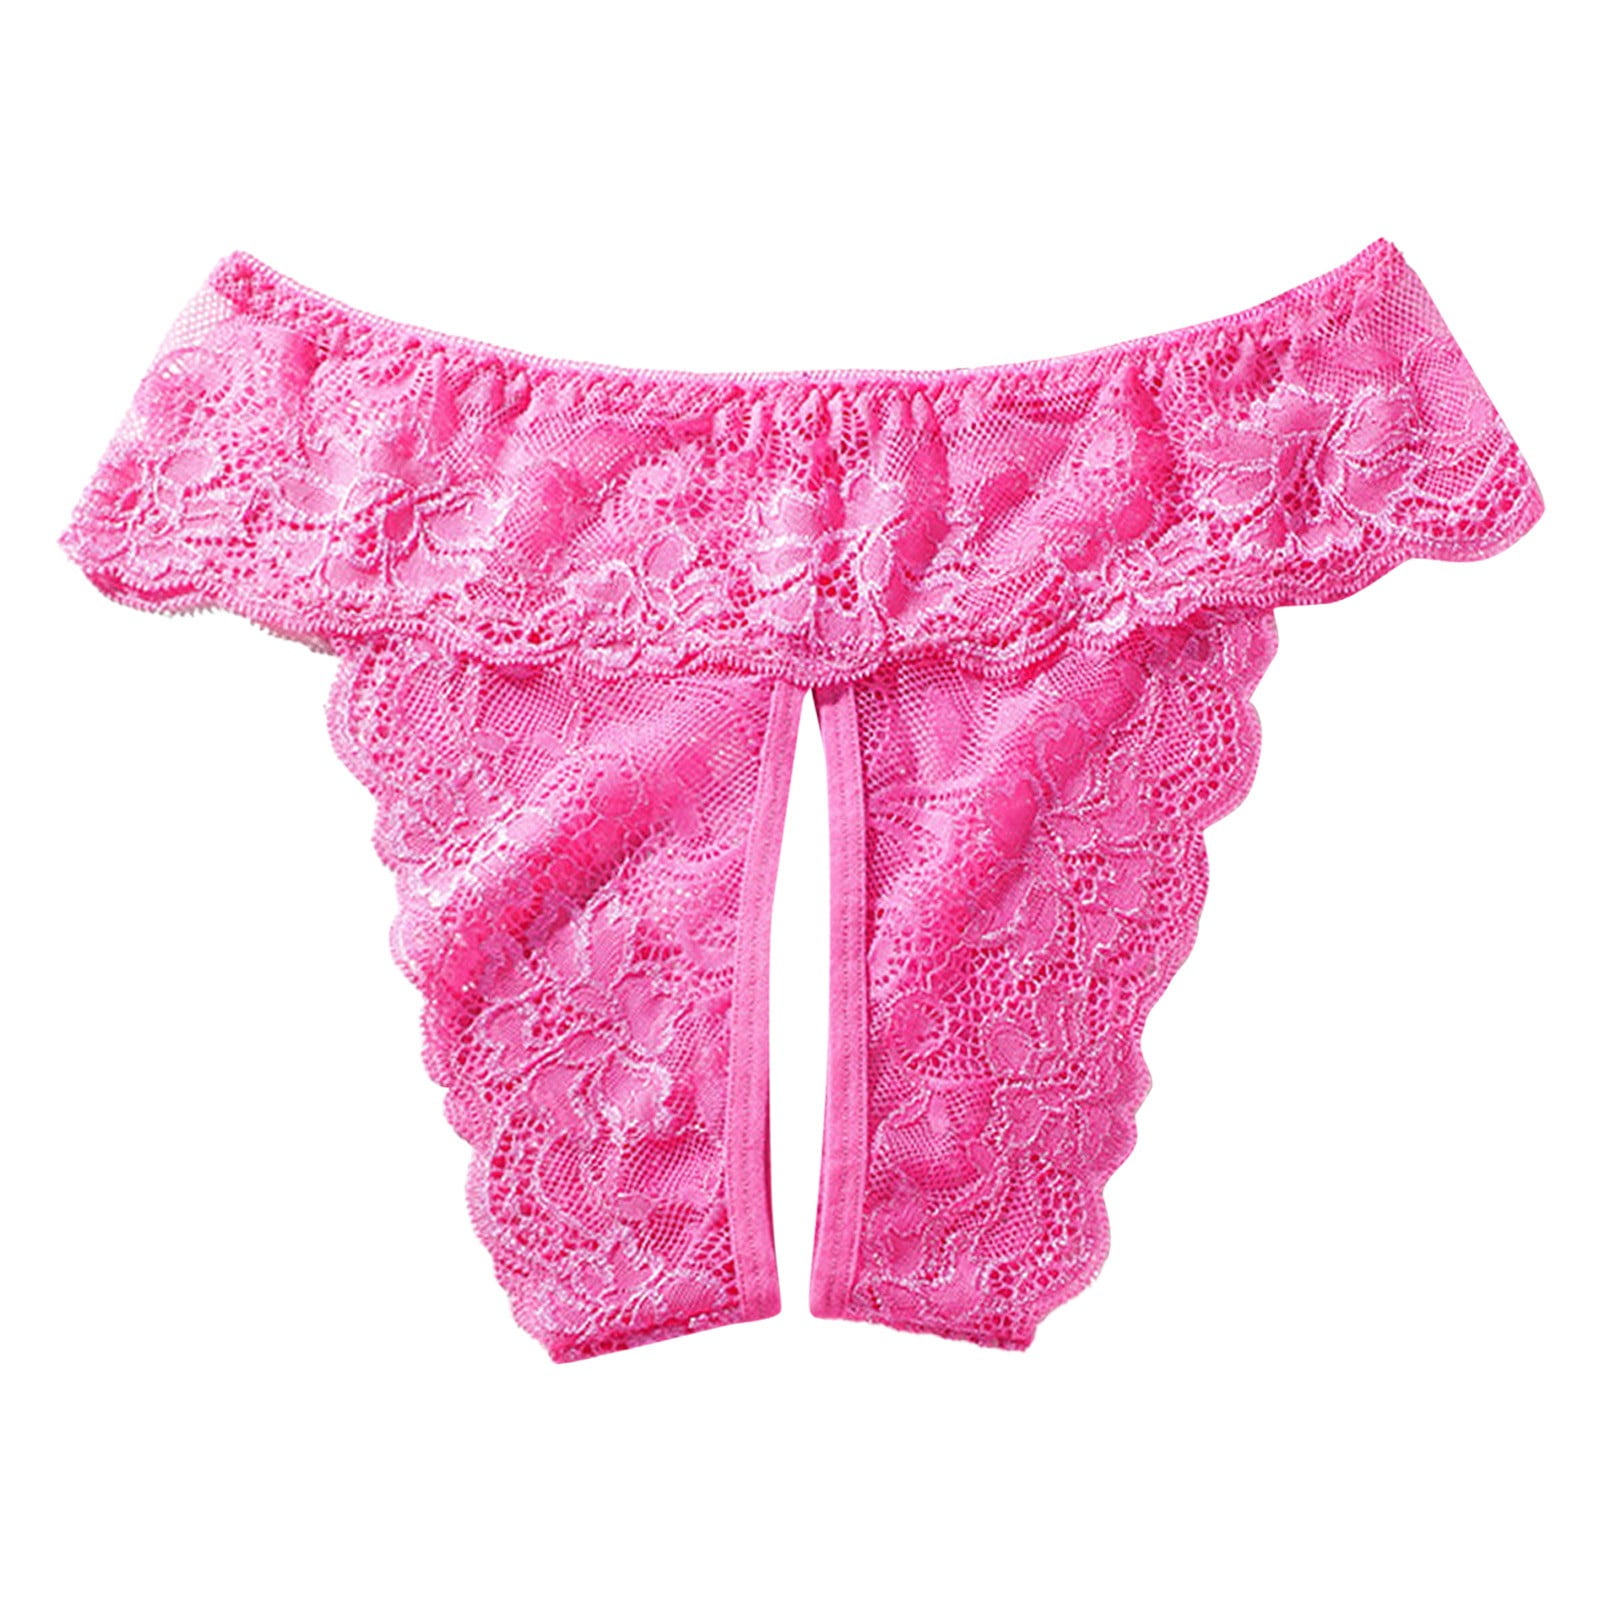 2DXuixsh Panties For Women Womens Lace Panties Thong Rise Cotton Underwear  Cutout Lace Bikini Briefs Womens Barely There Underwear Lace Hot Pink Xxxxl  